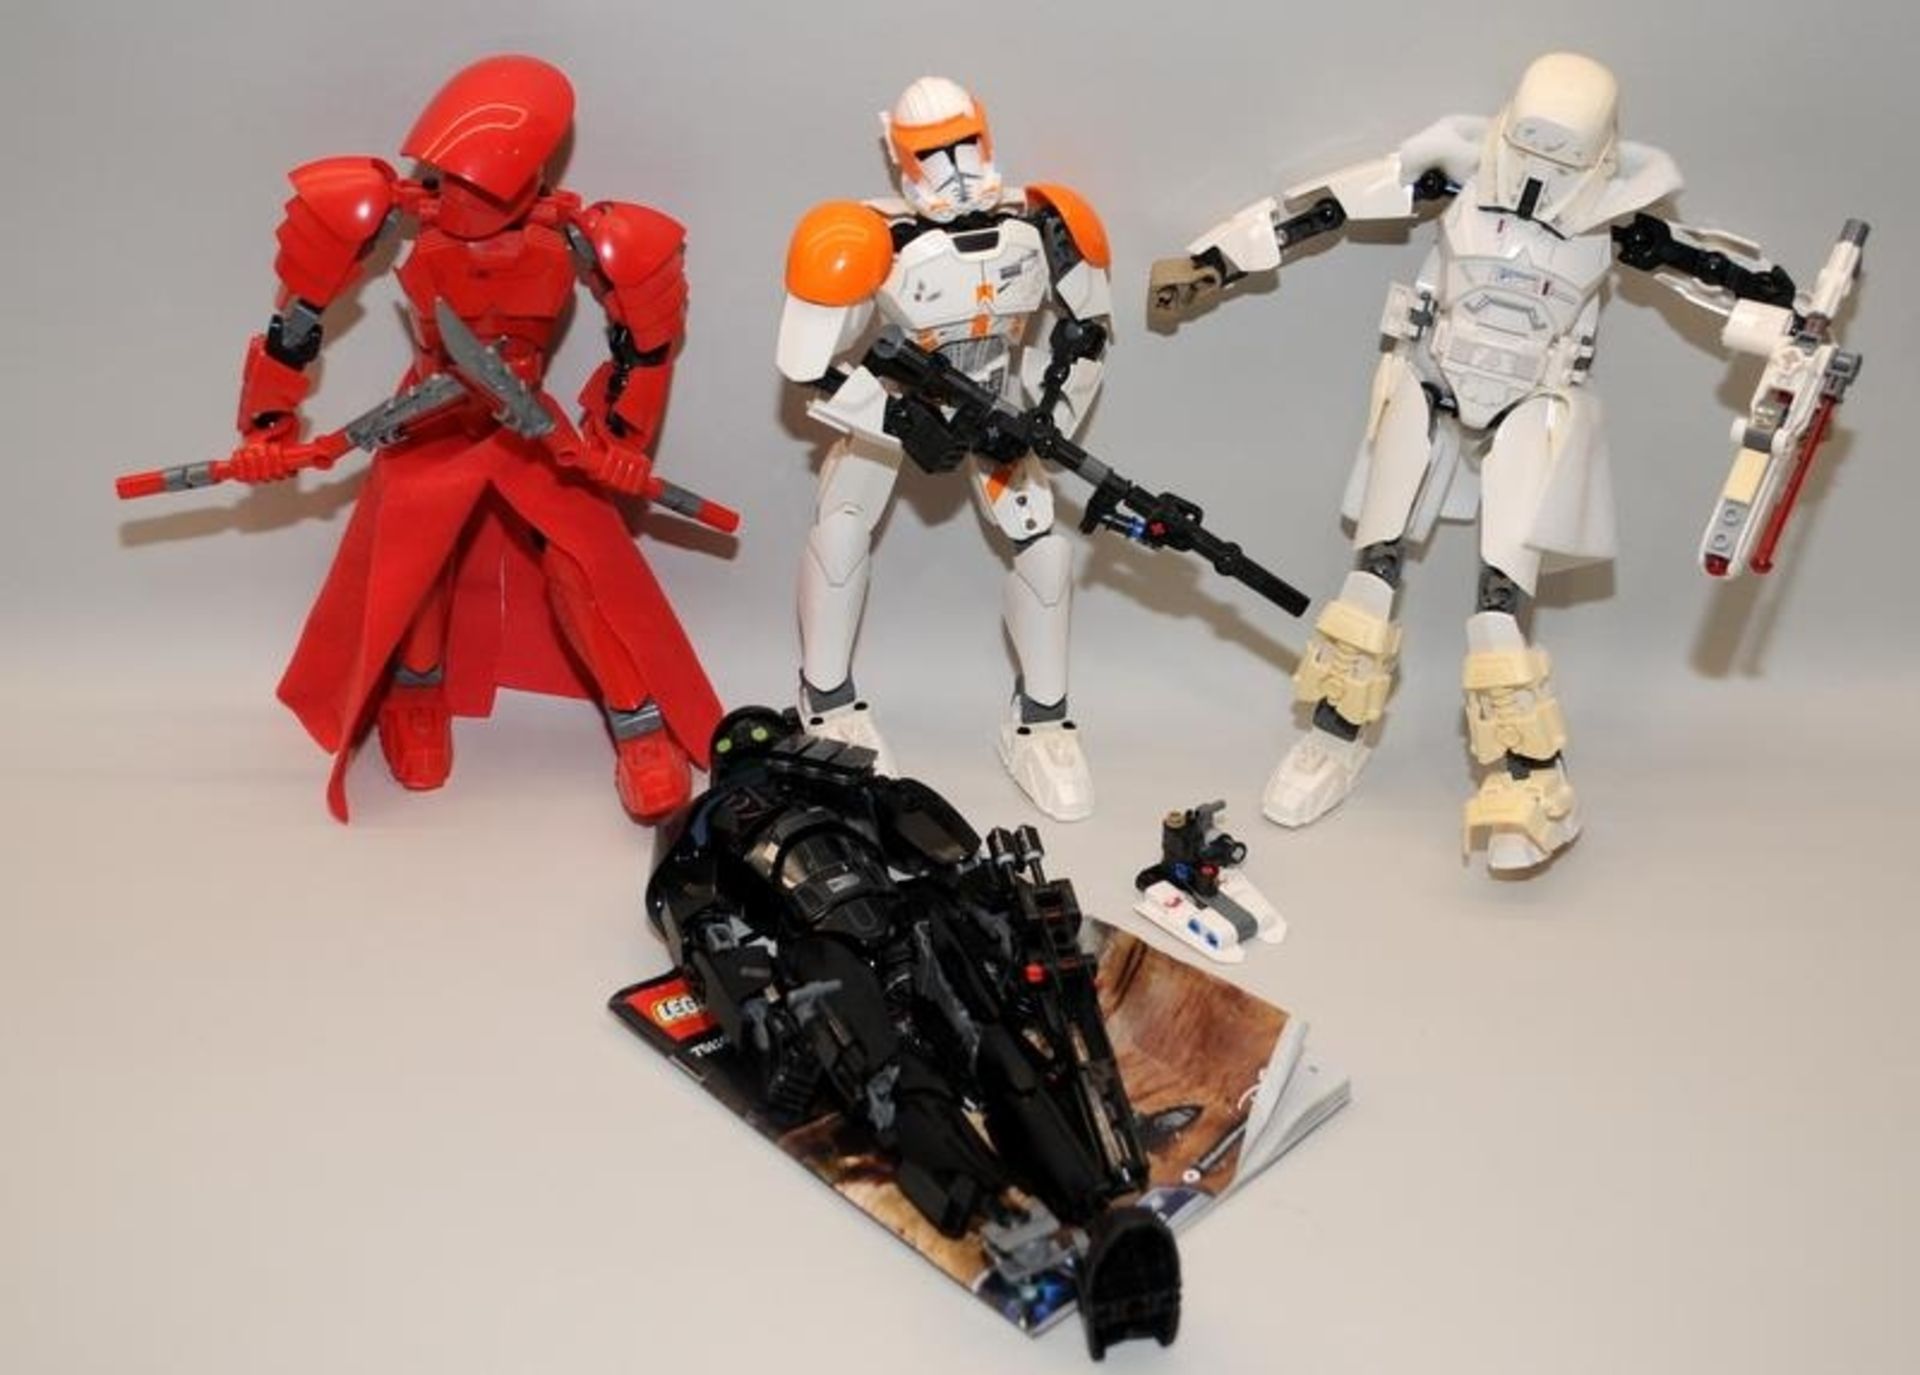 Star Wars Lego built figures Imperial Death Trooper ref:75121, Elite Praetorian Guard ref:75529, - Image 5 of 5